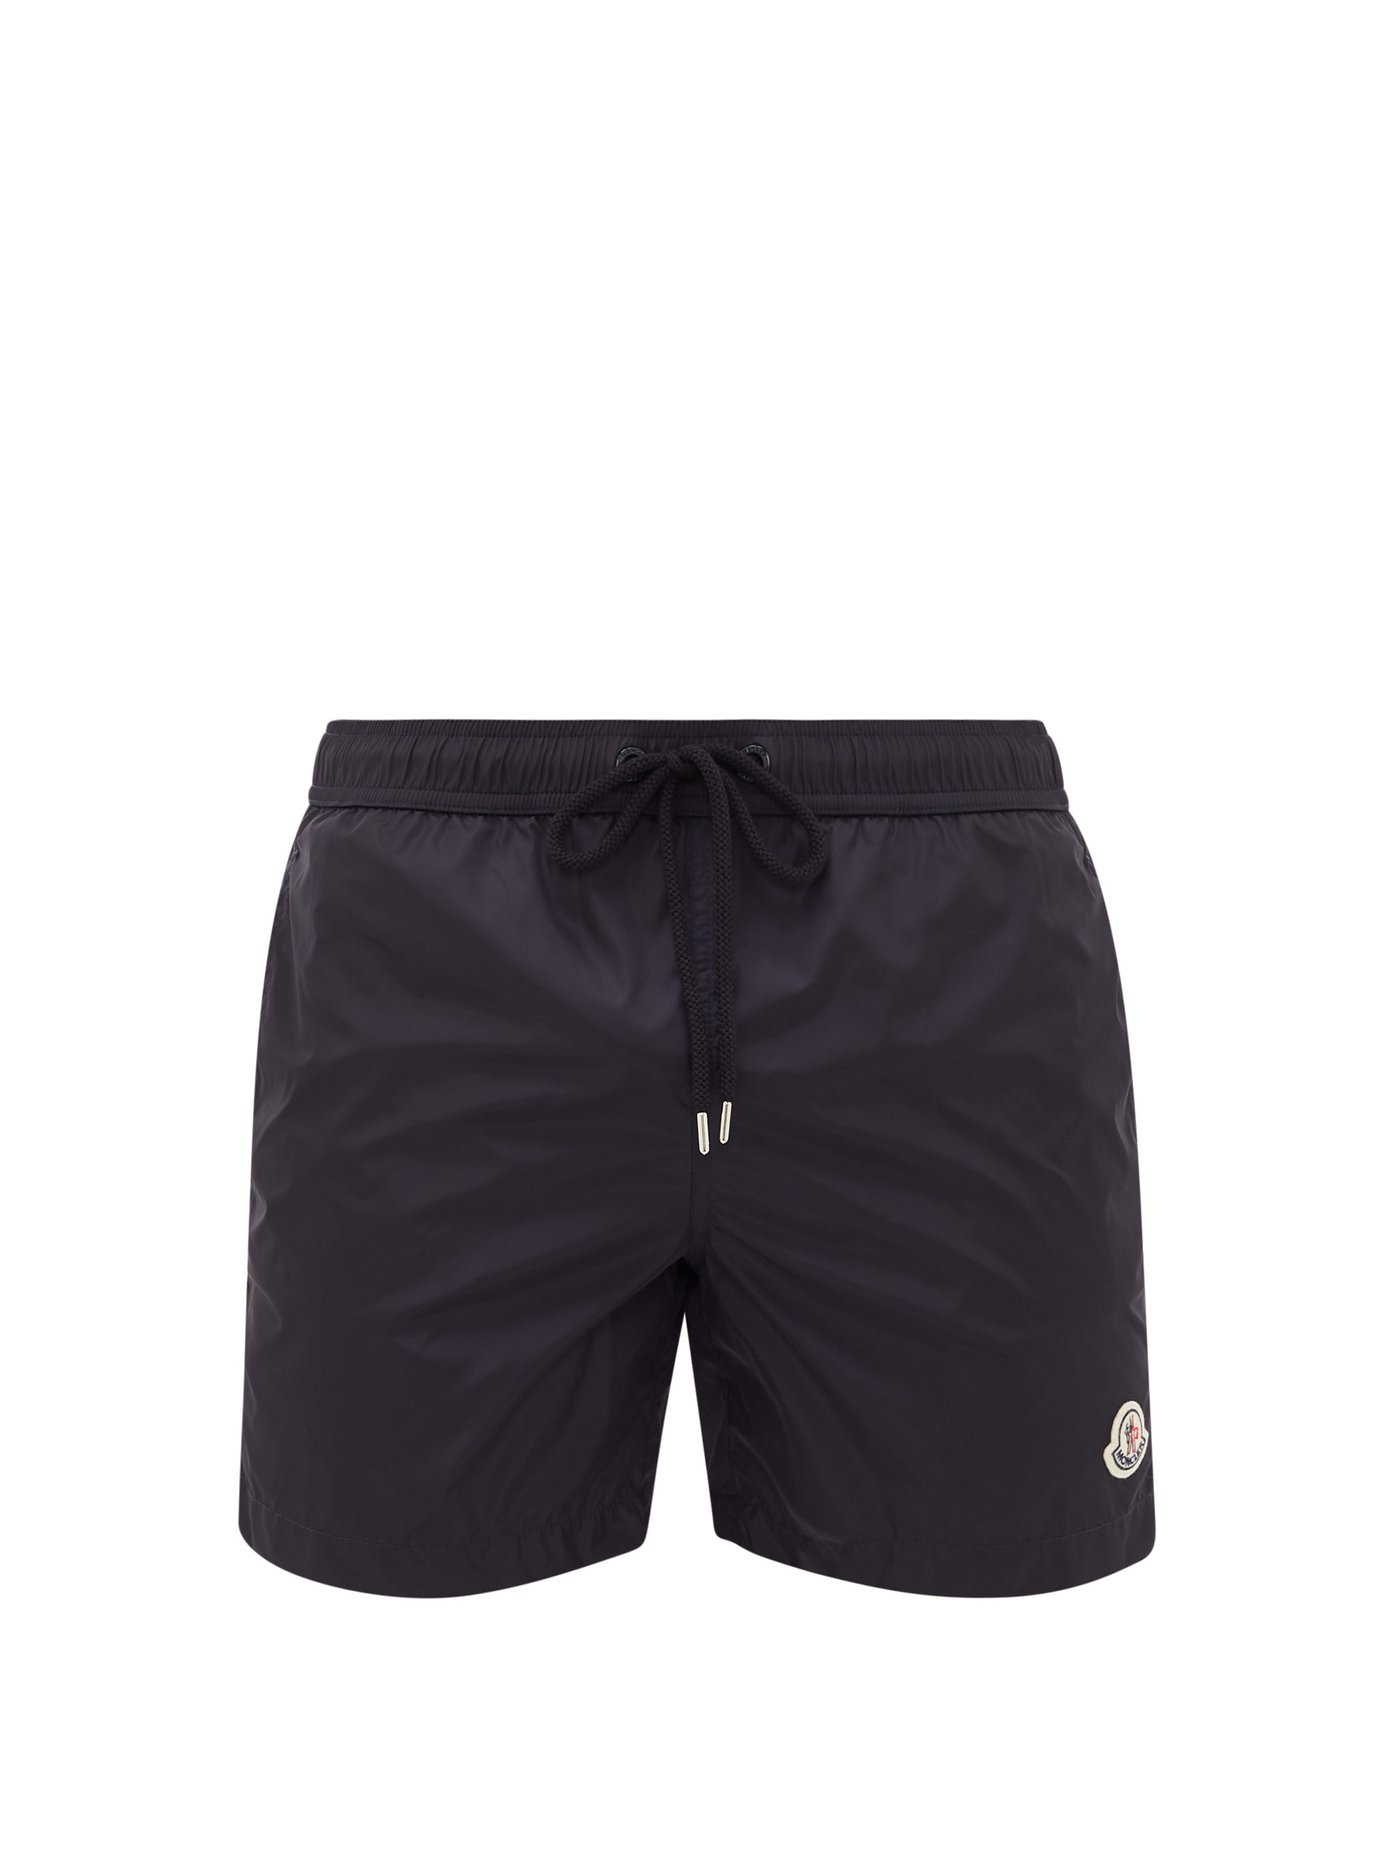 moncler black swim shorts